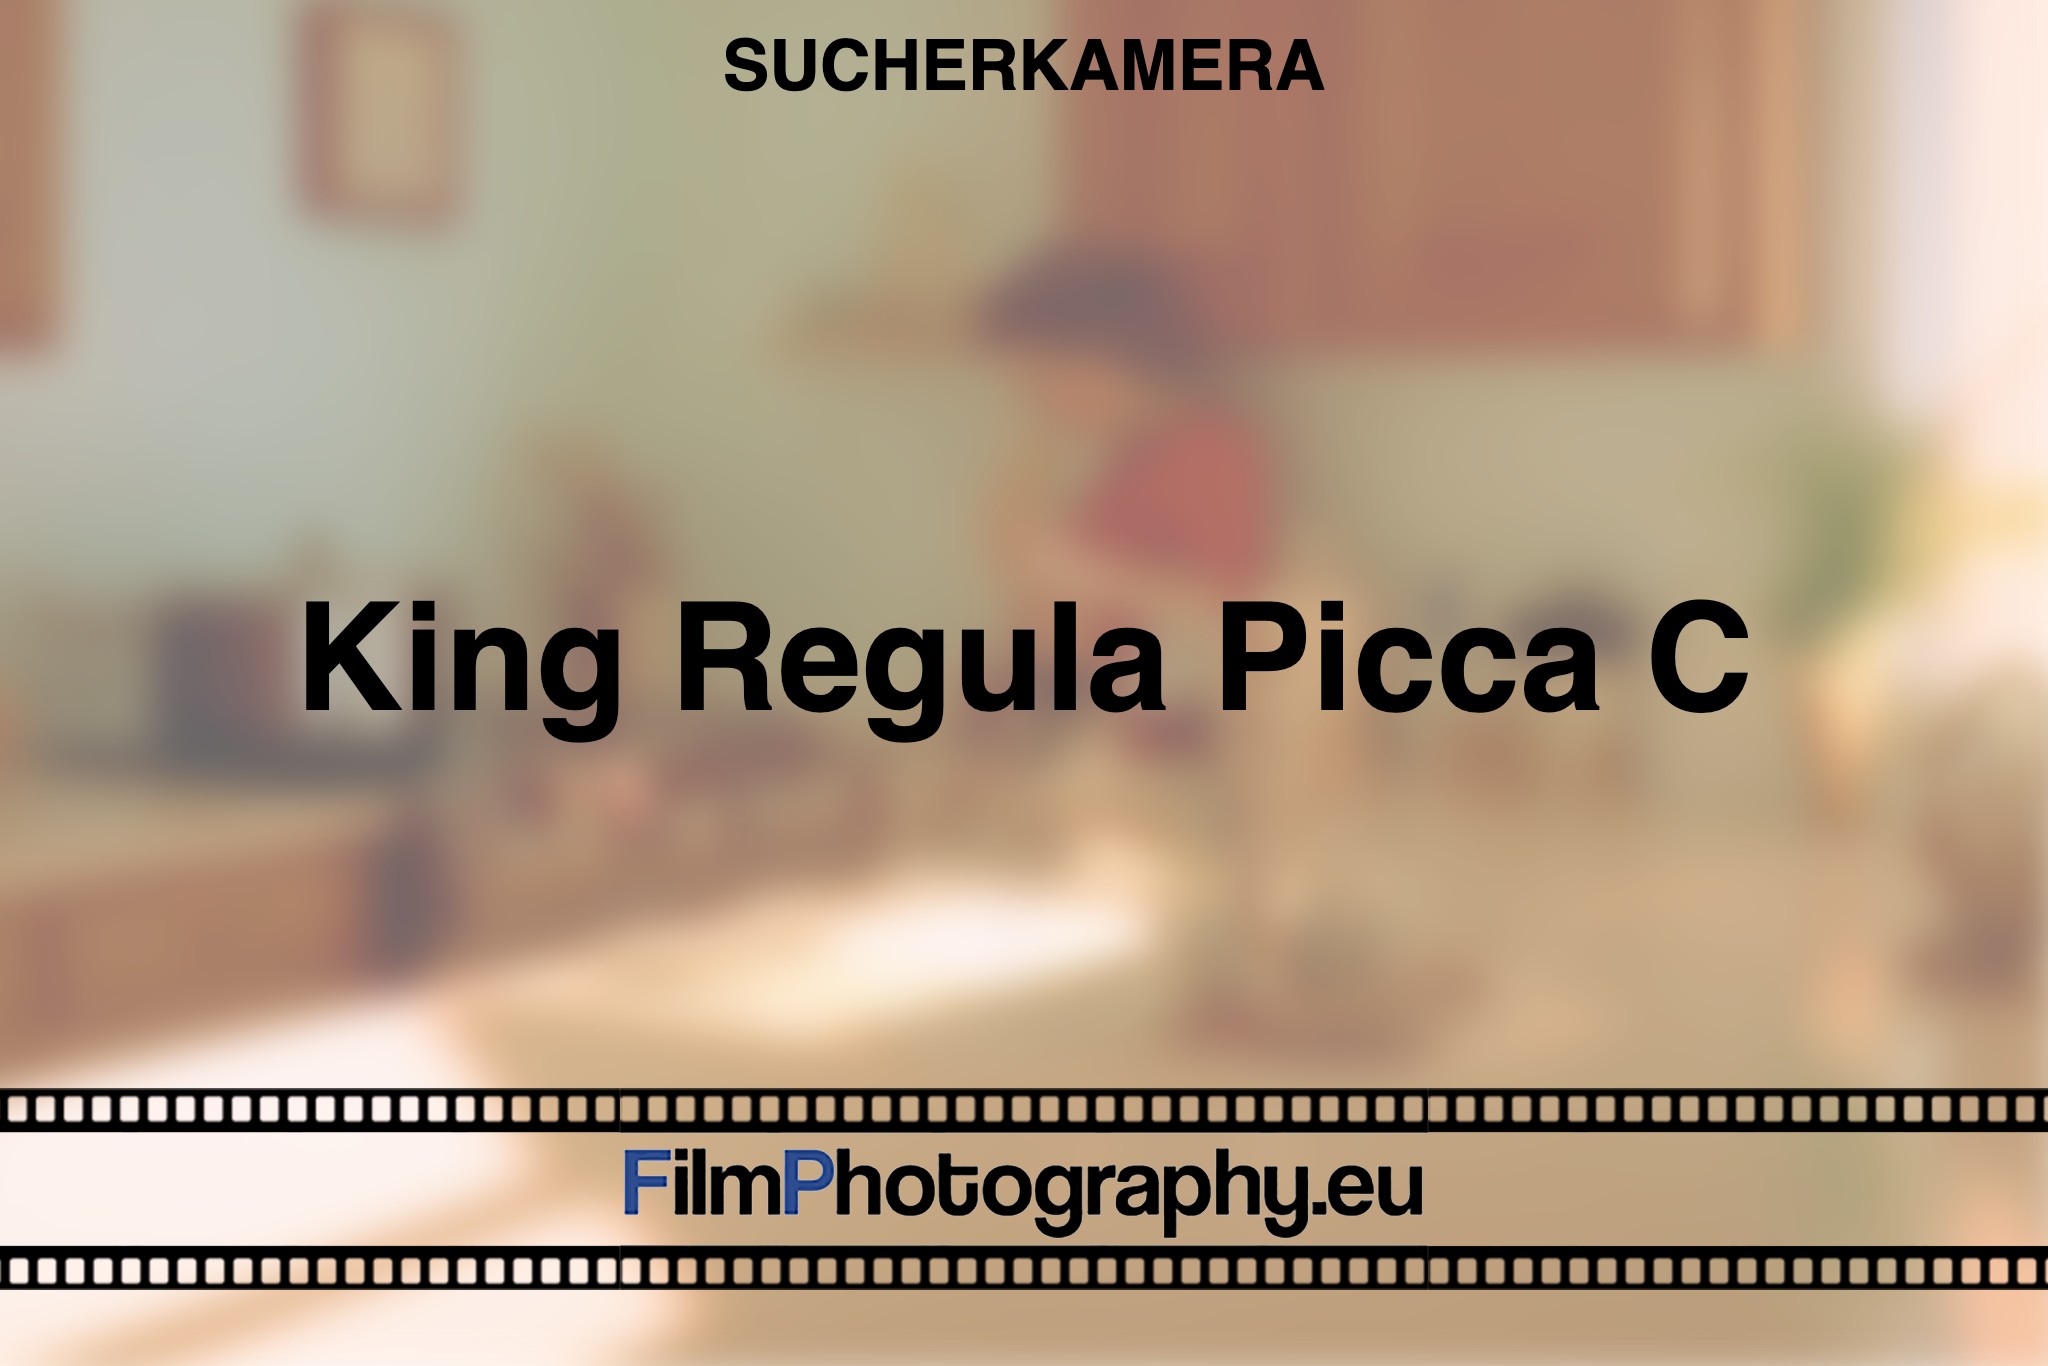 king-regula-picca-c-sucherkamera-bnv